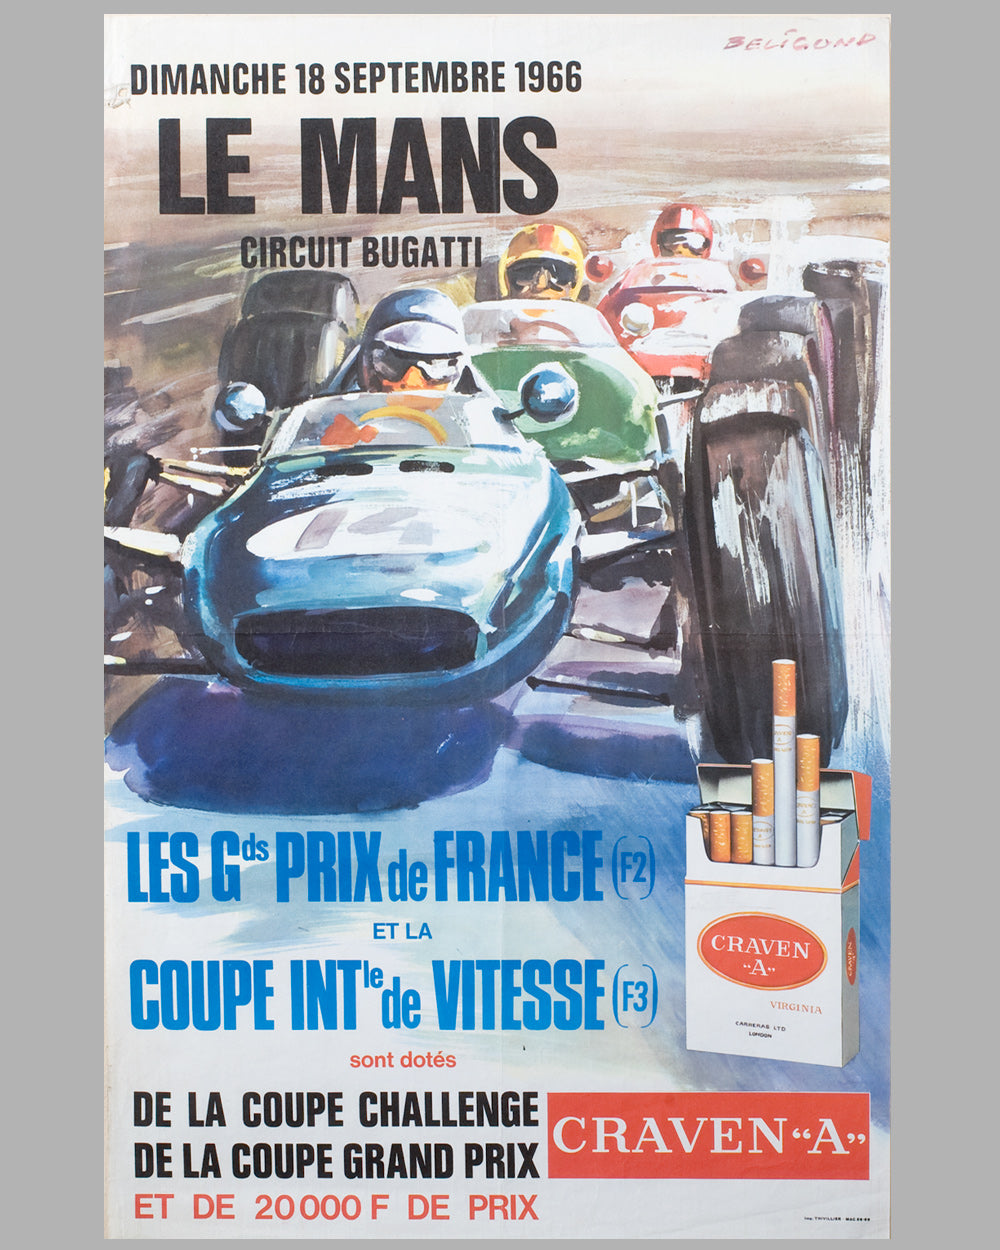 1966 Grand Prix de France Formula 2 race at Circuit Bugatti in Le Mans, original poster by Beligond